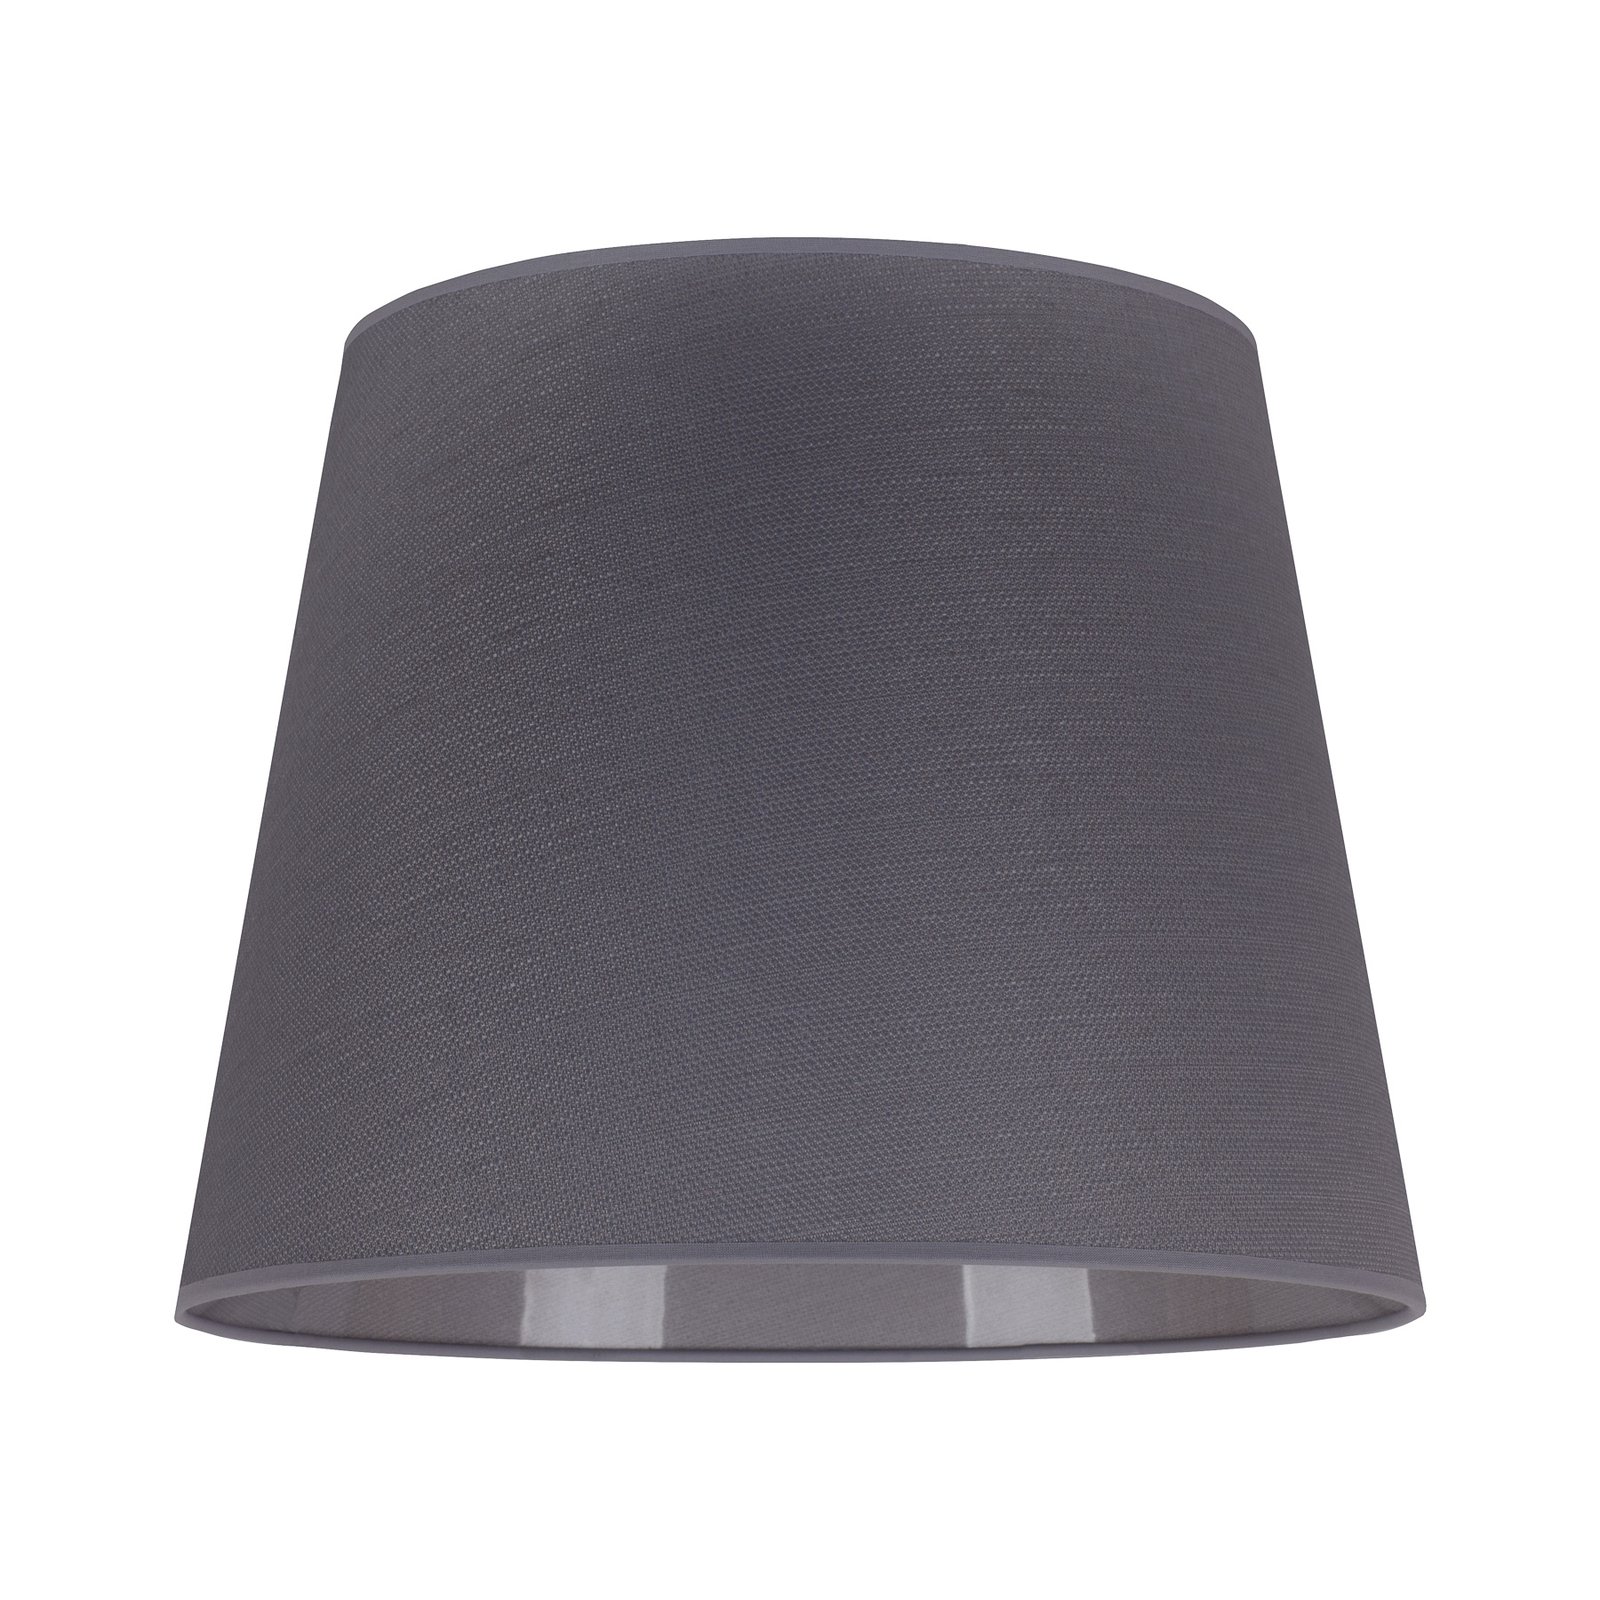 Classic L floor lamp lampshade, veroni grey